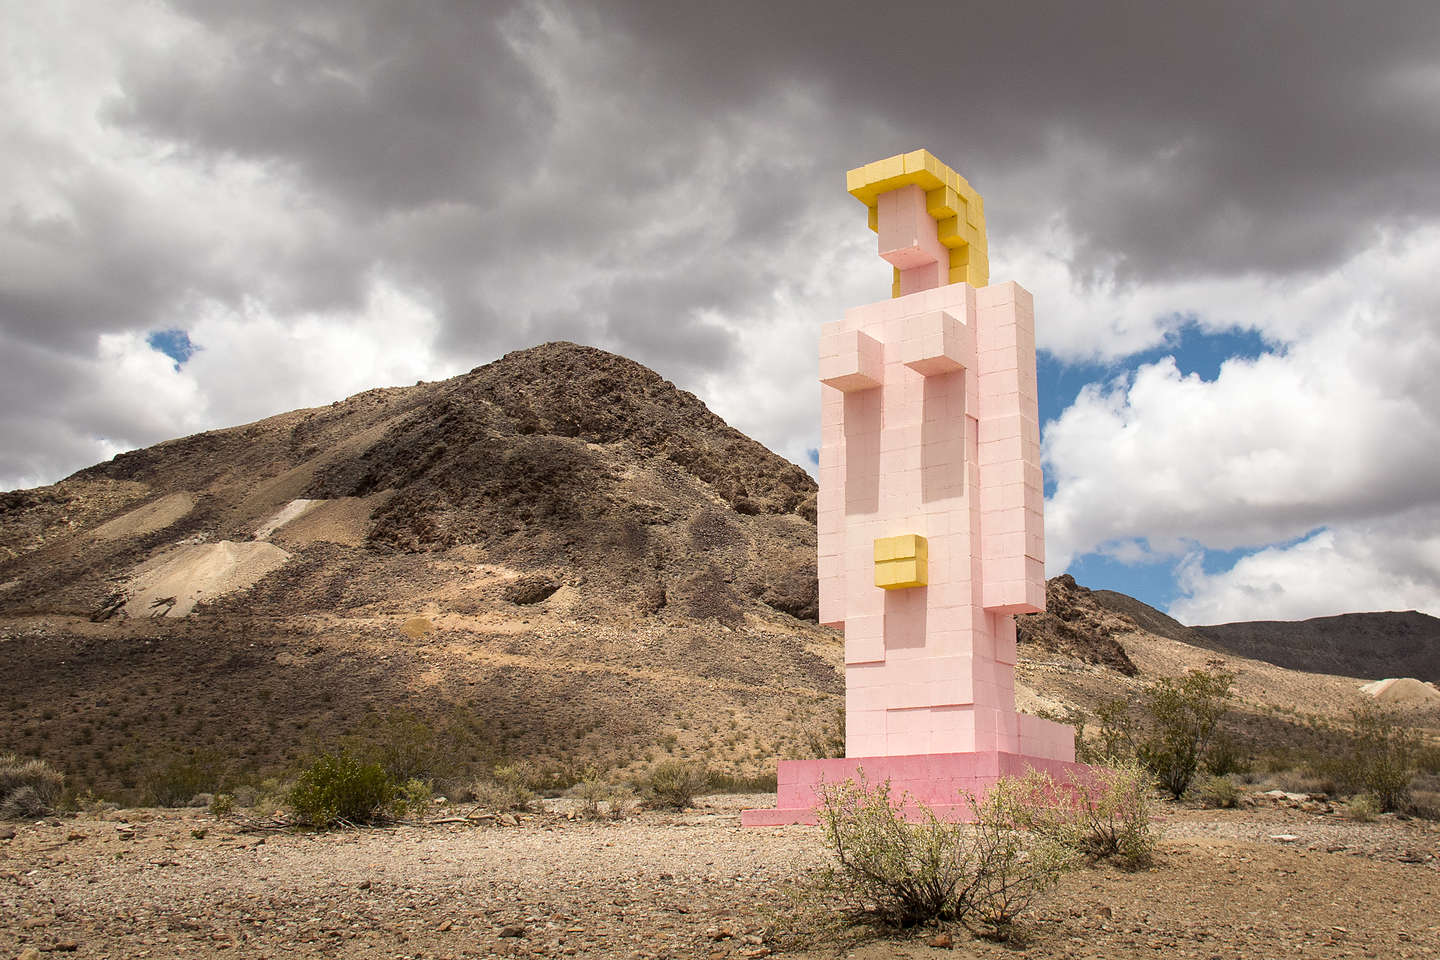 Lady Desert: The Venus of Nevada